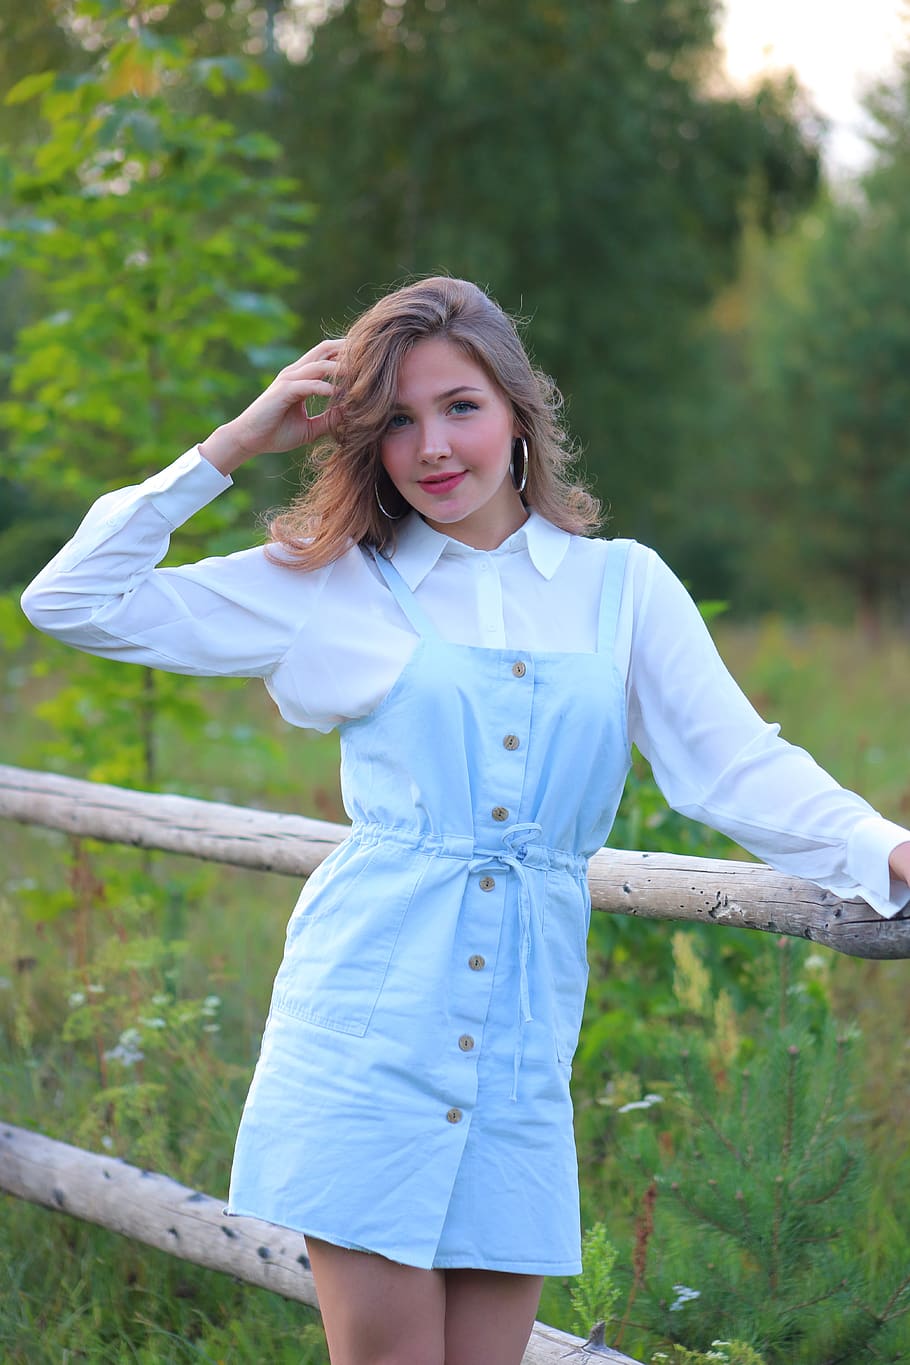 beauty, briansk, bryansk oblast, village, field, girl, russia, nature, landscape, tourism